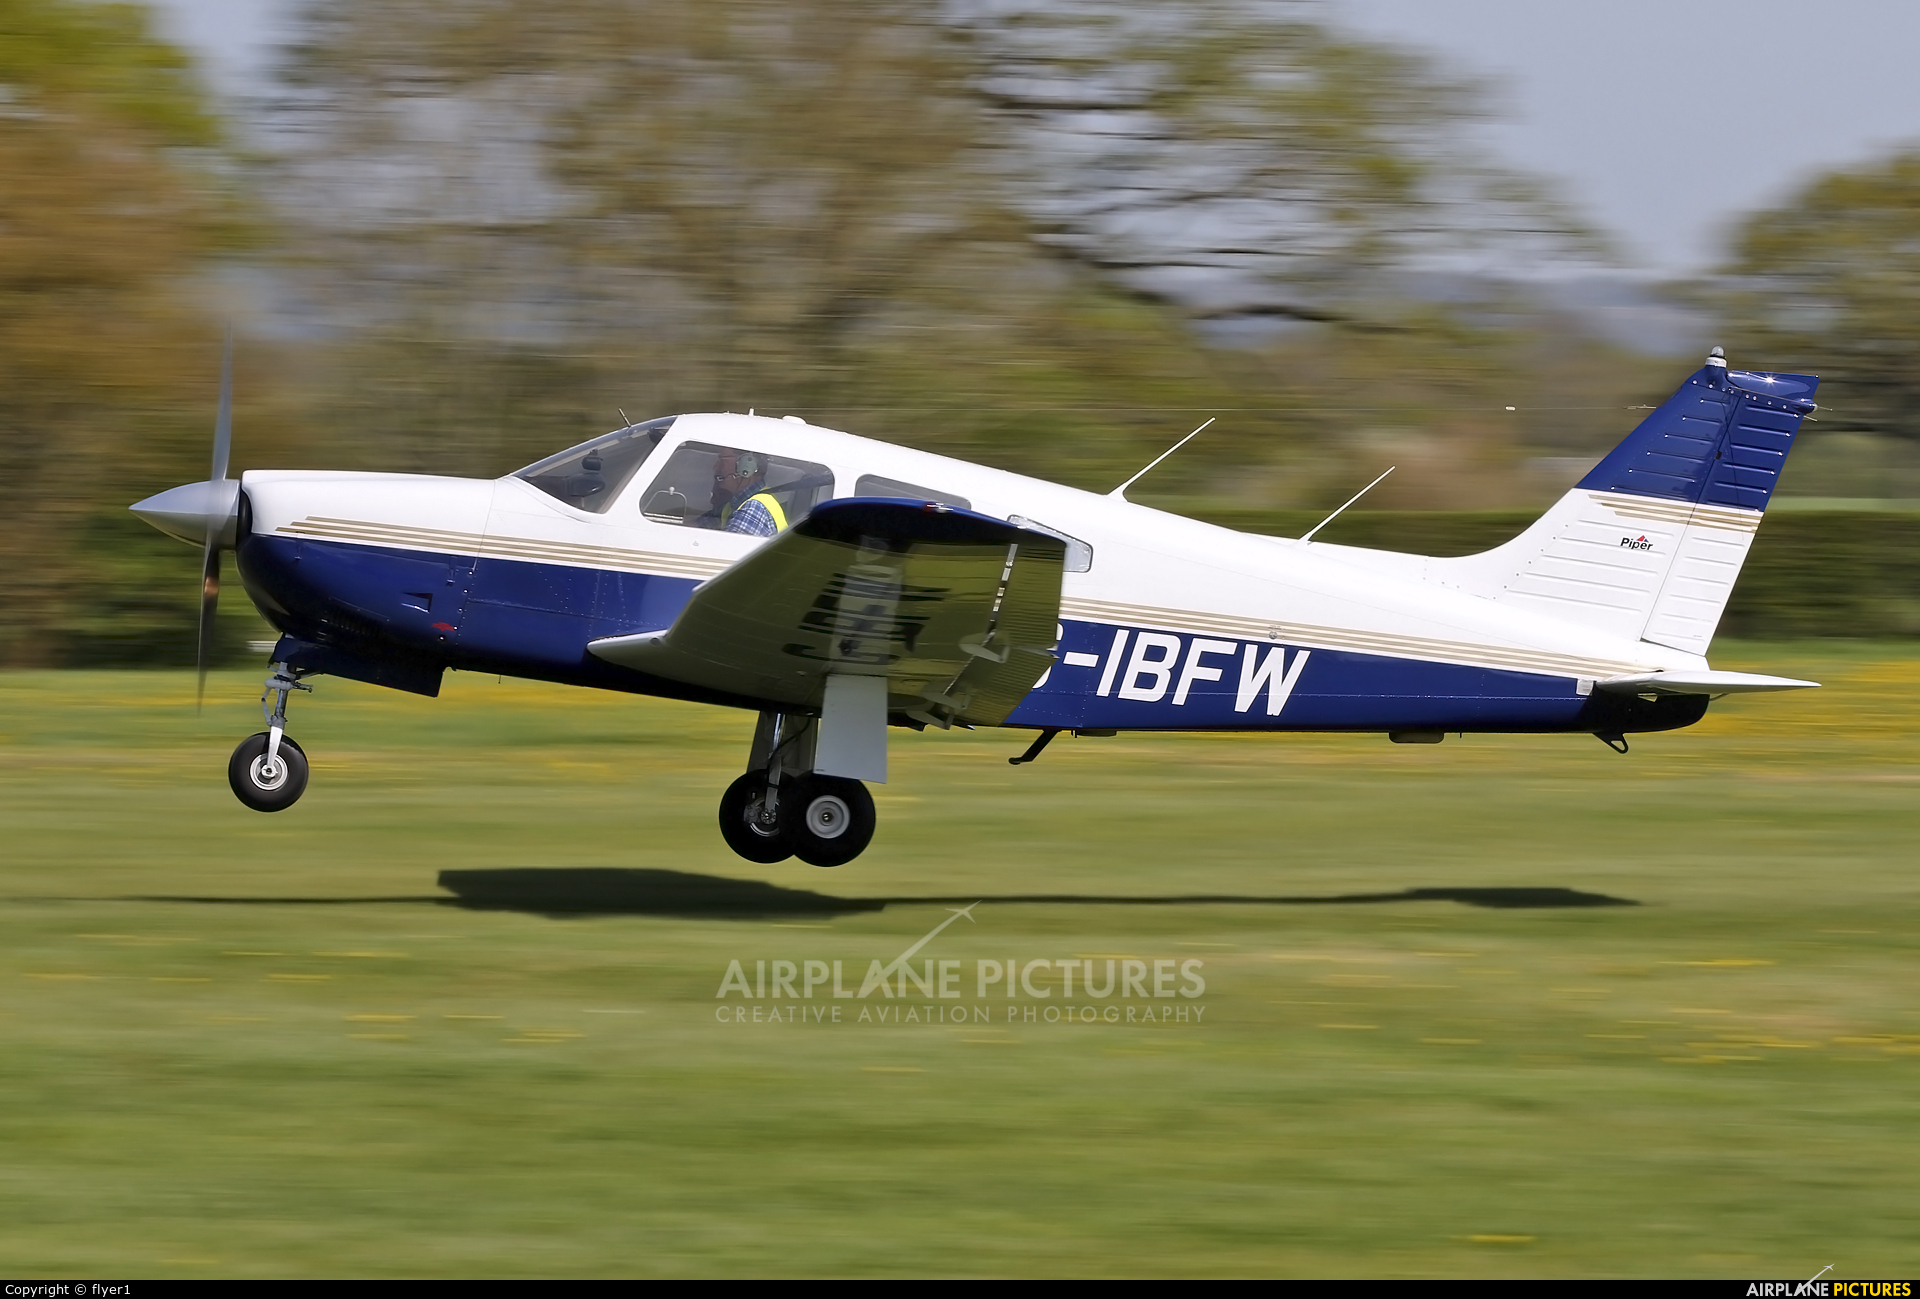 Private GIBFW aircraft at Lashenden / Headcorn